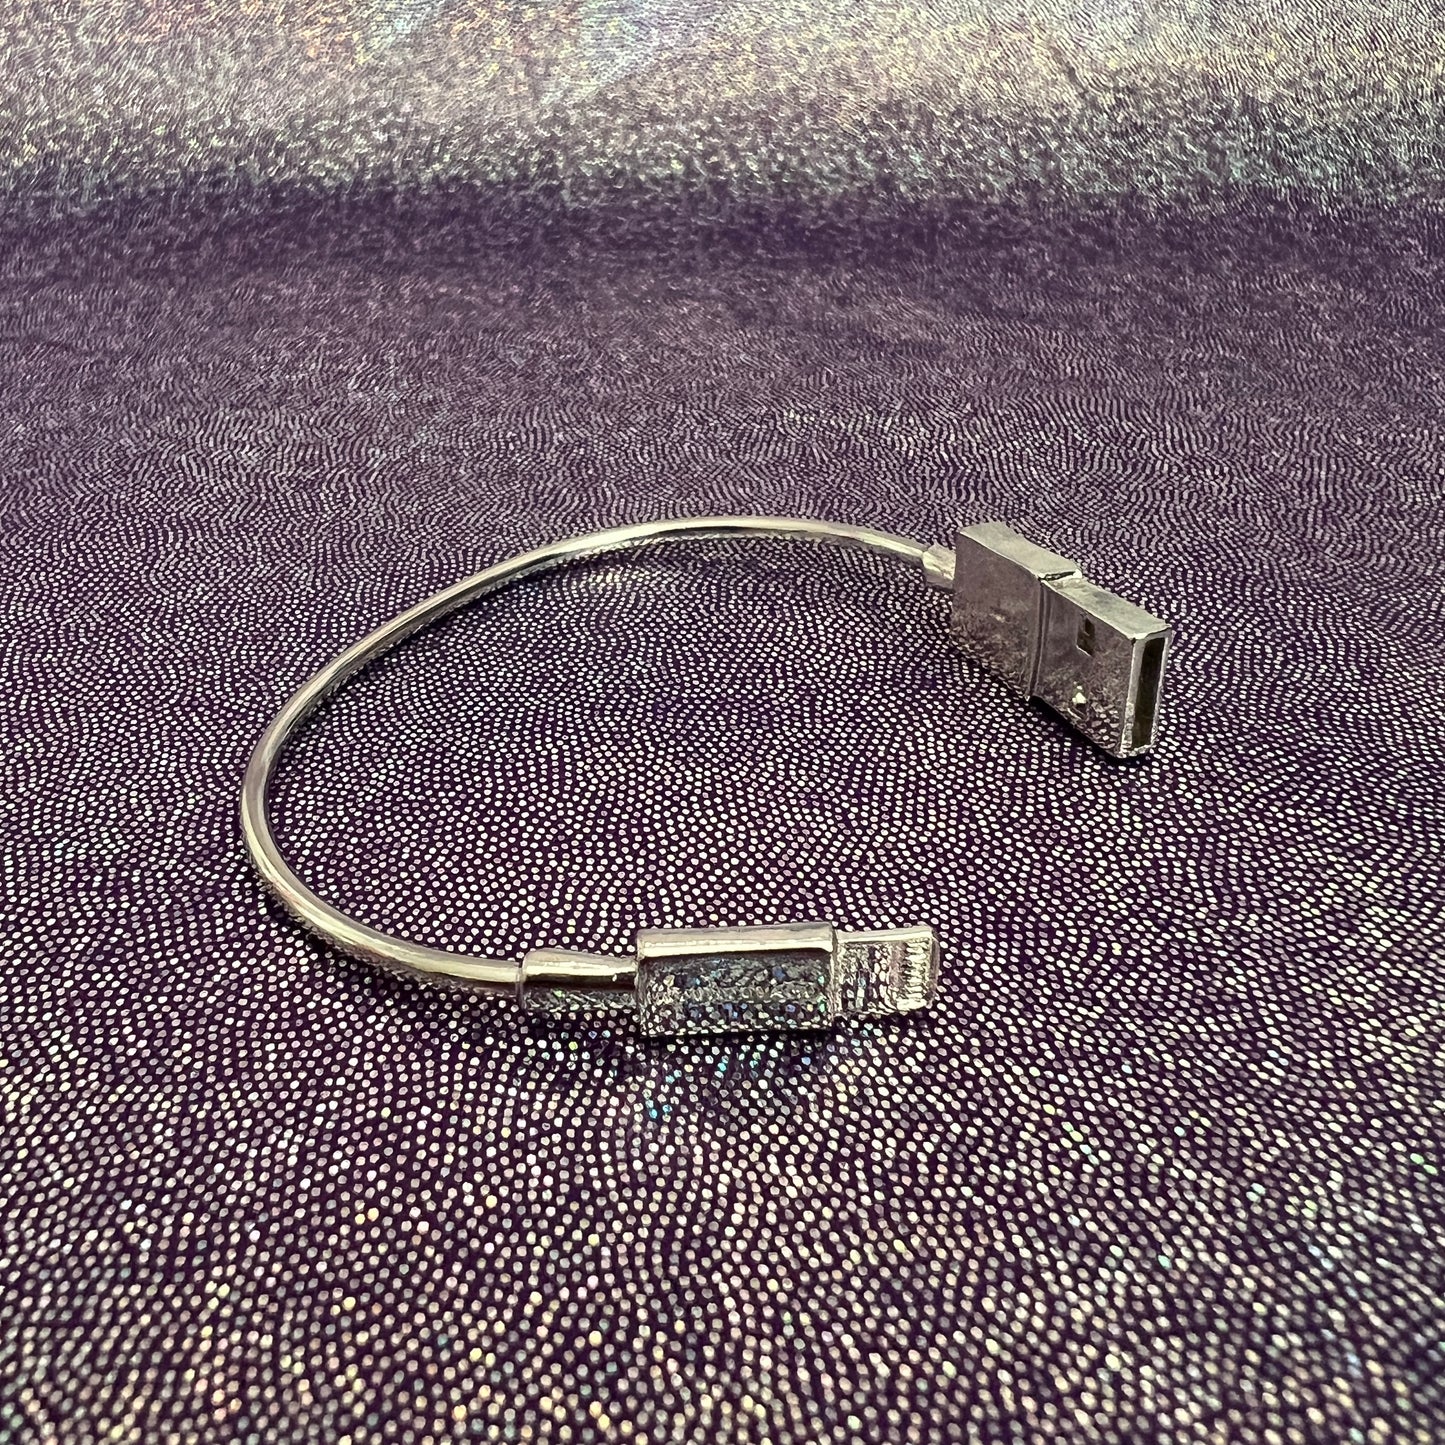 USB Cuff Bracelet